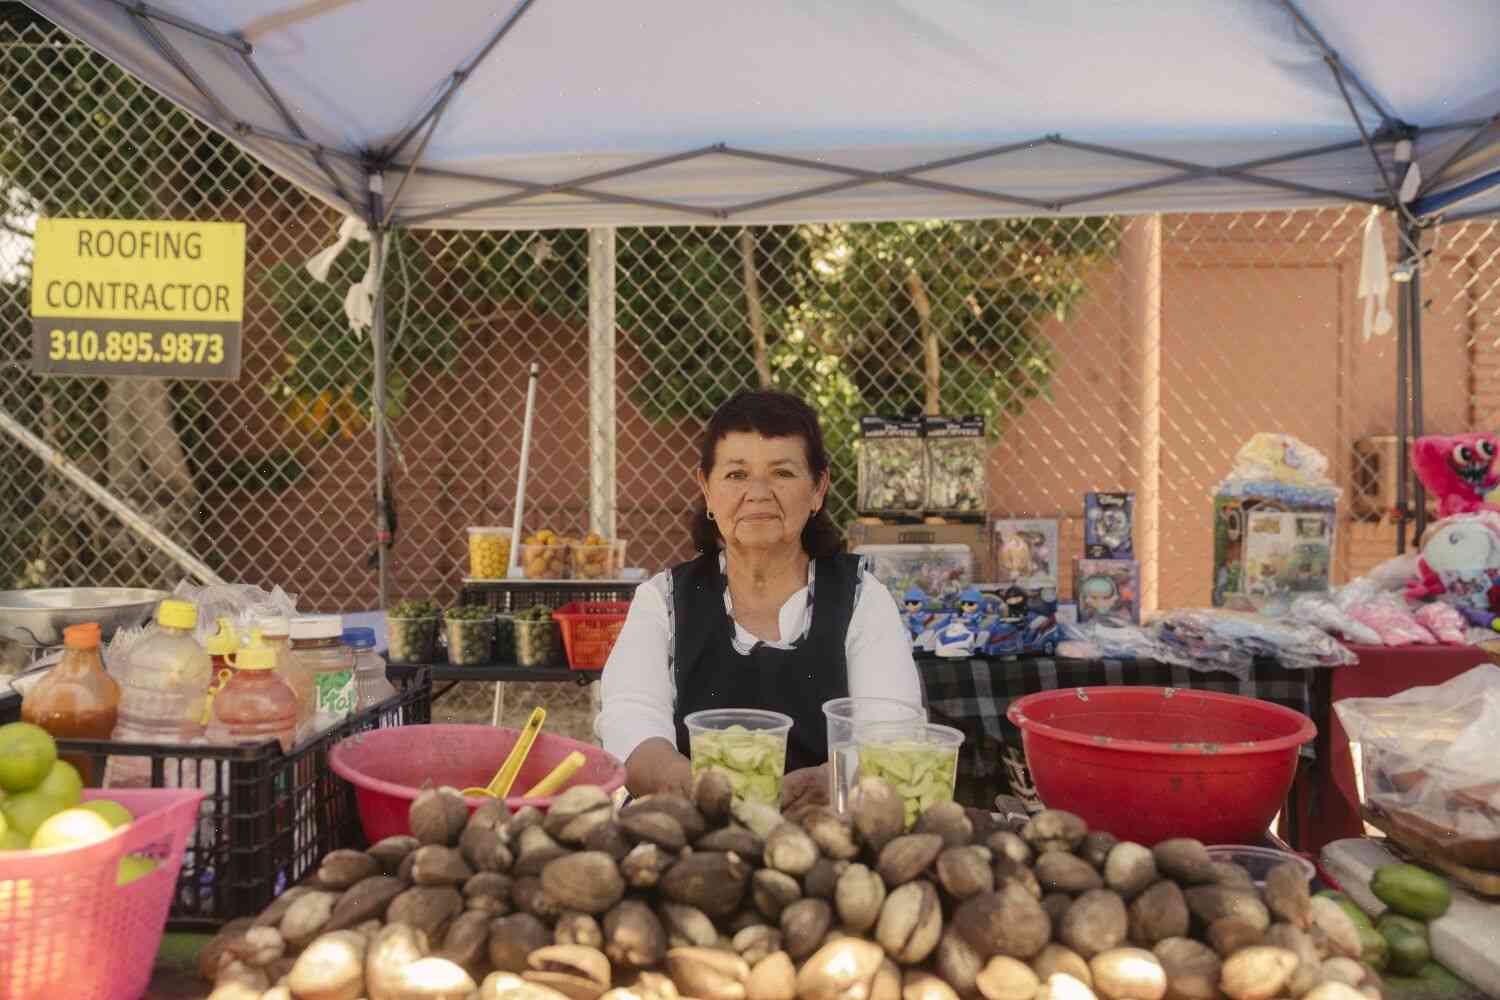 Mariela, a Salvadoran woman who fled domestic abuse, has a job at the local market